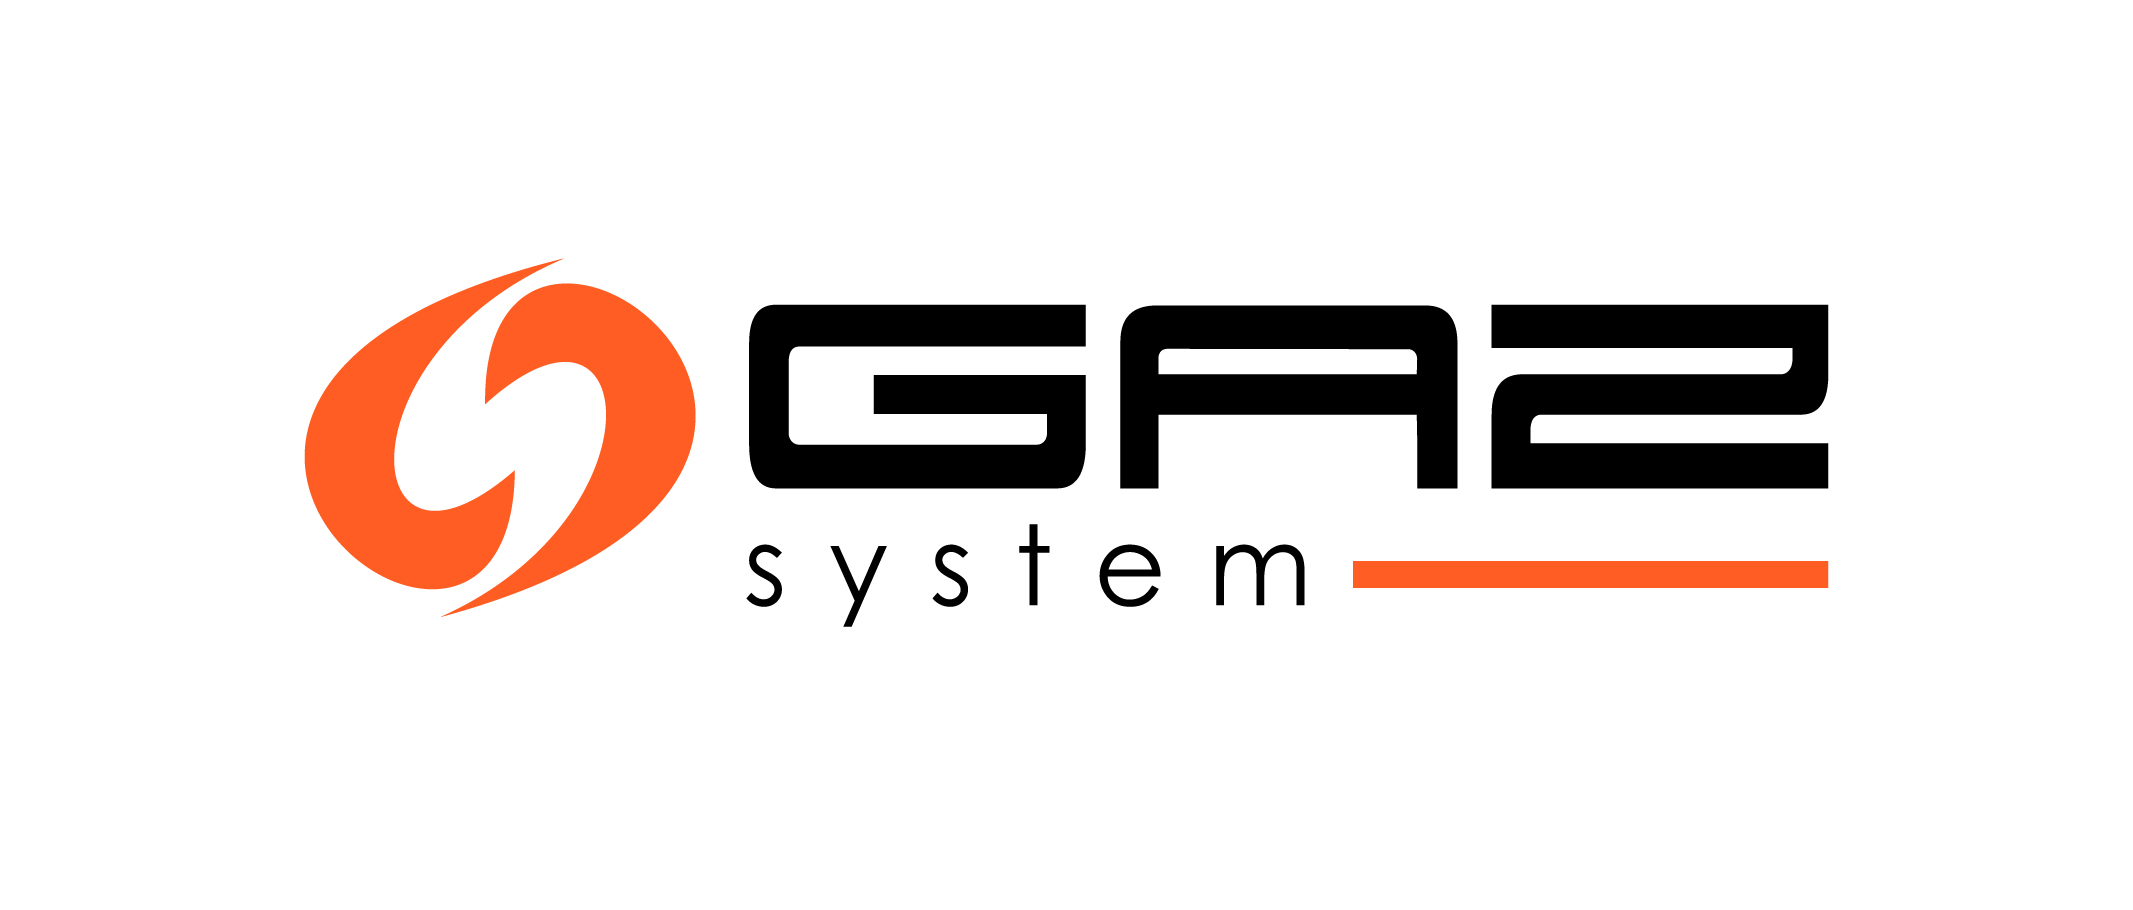 The System Logo photo - 1